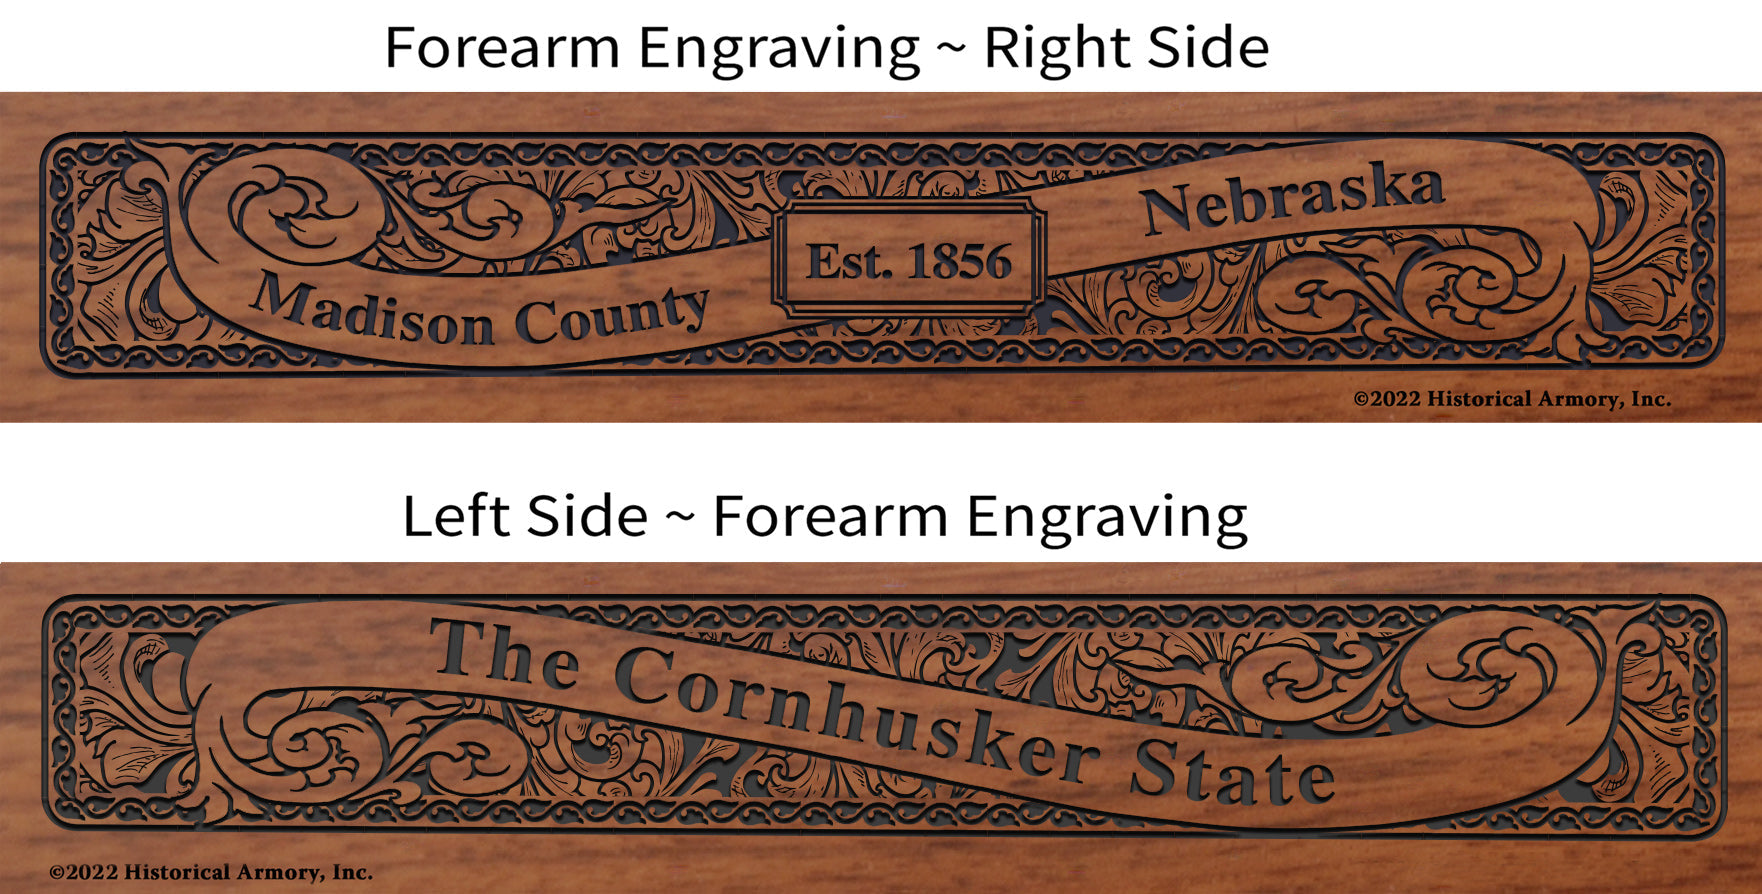 Madison County Nebraska Engraved Rifle Forearm